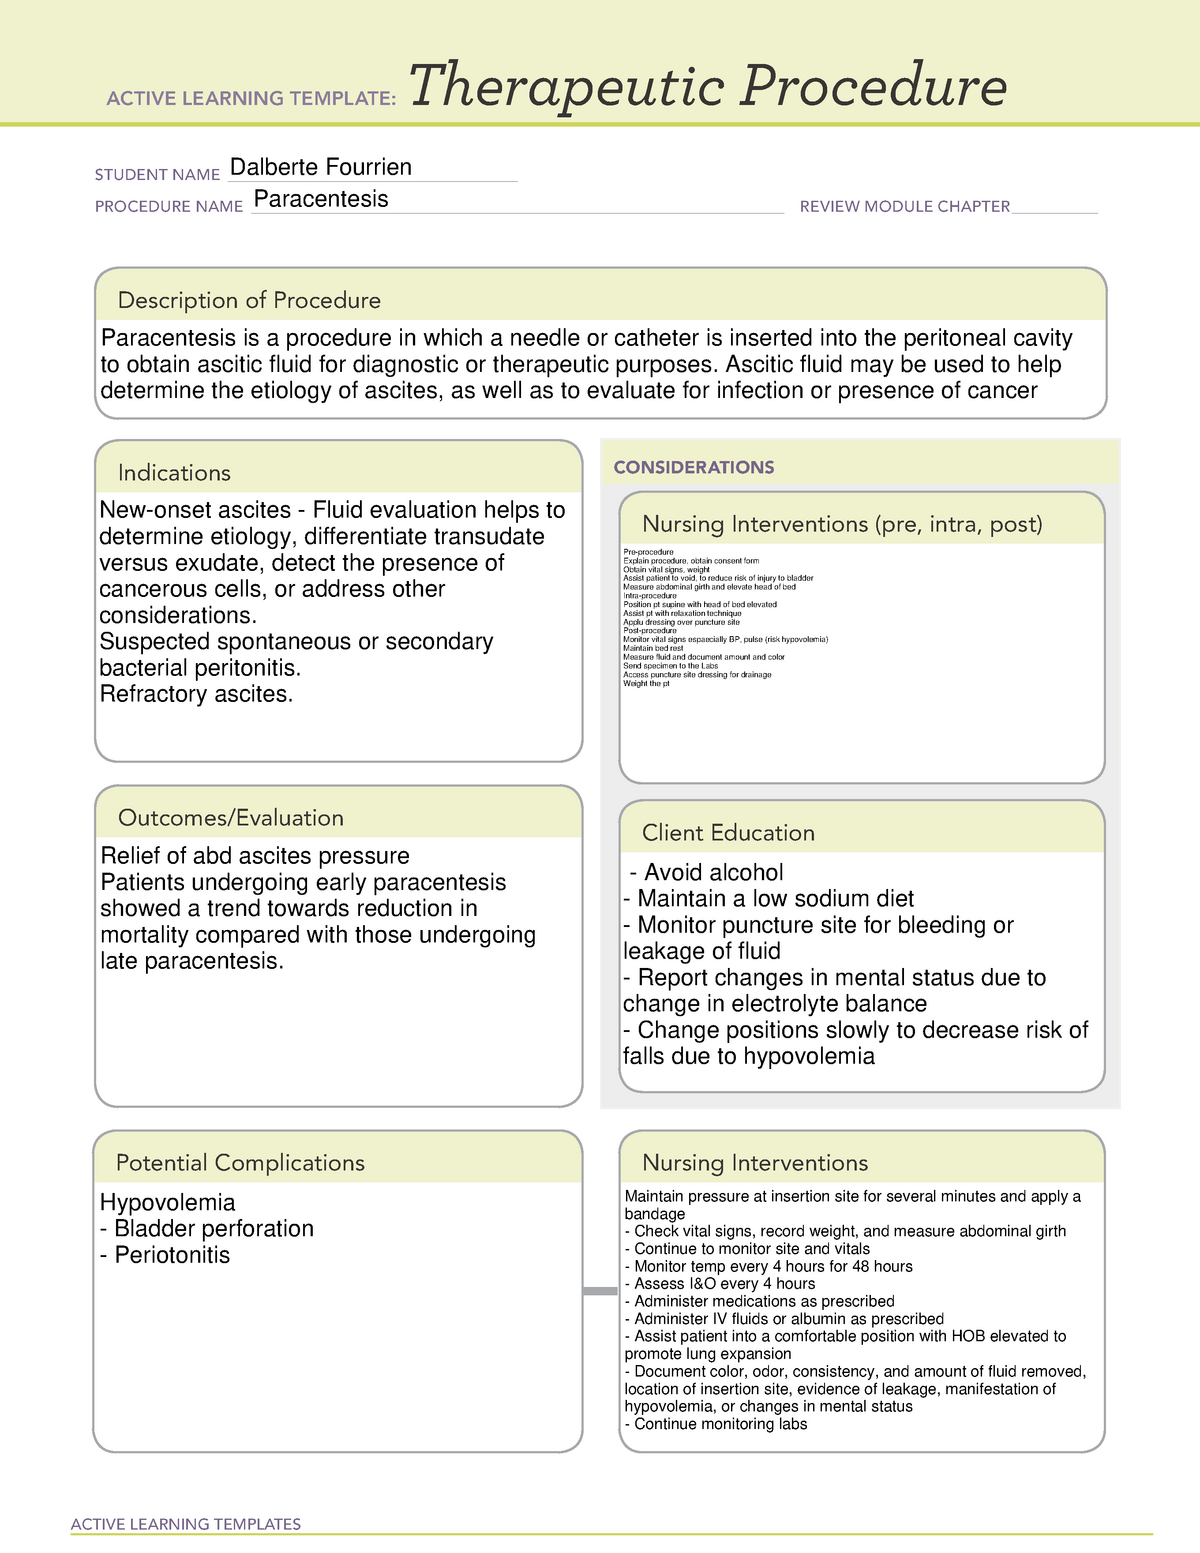 ati-therapeutic-procedure-paracentesis-active-learning-templates